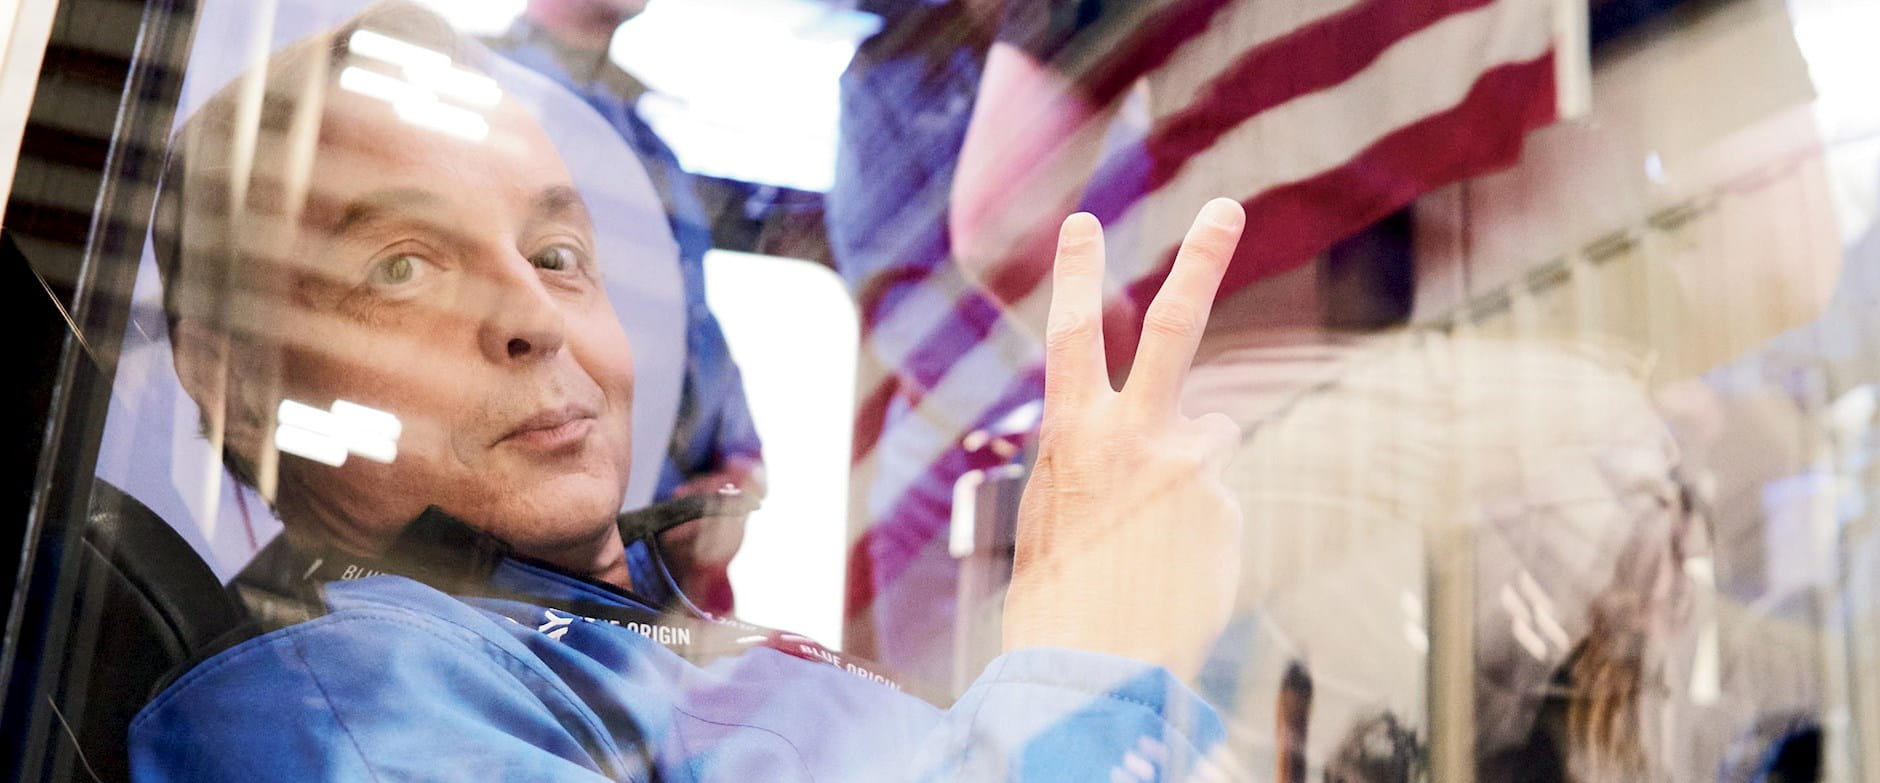 A crew member of Blue Origin's space exploration program giving a peace sign through a window